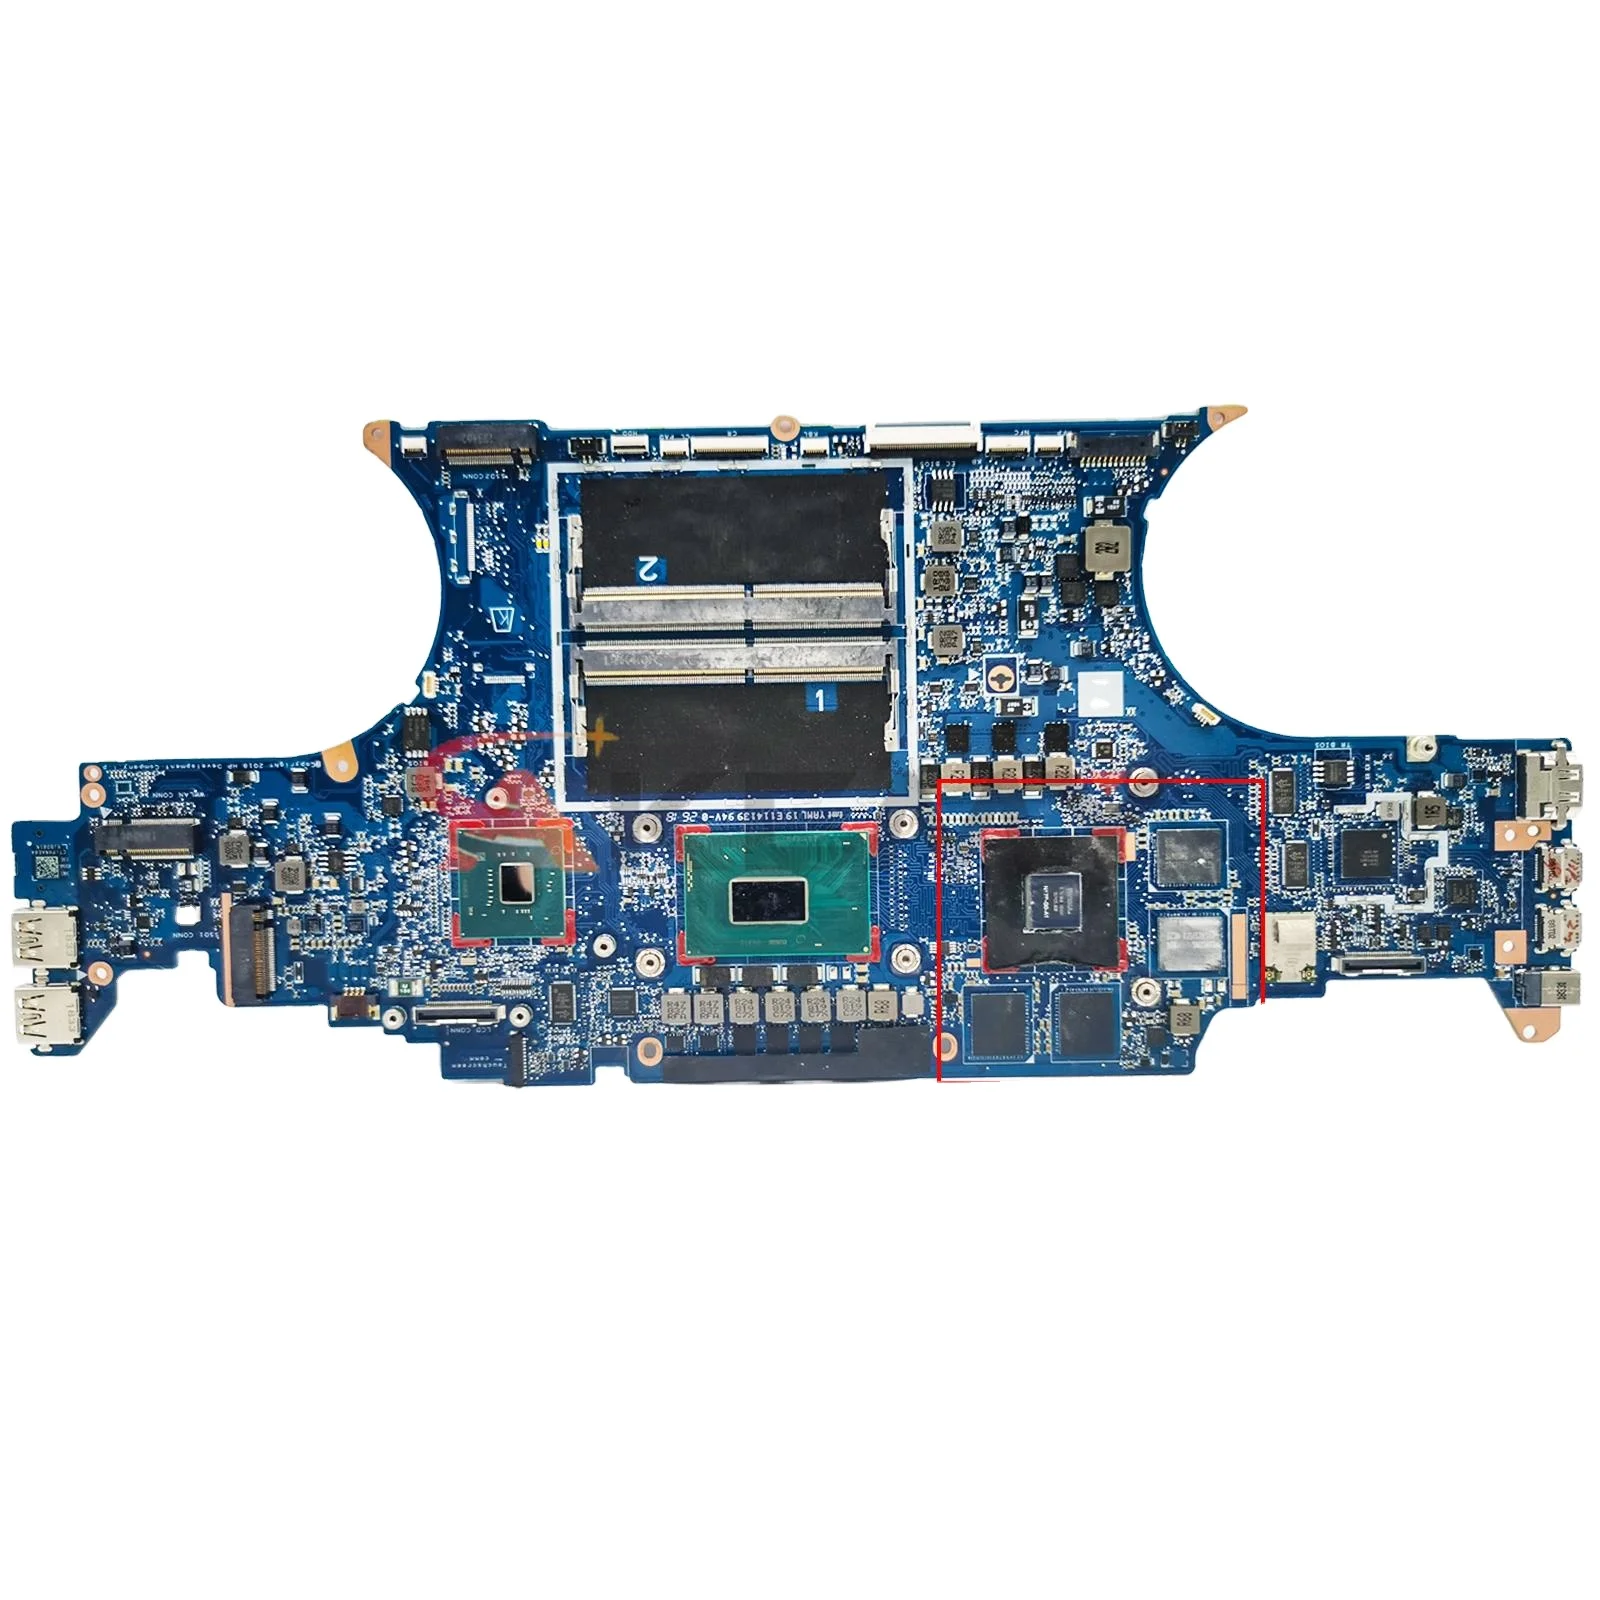 

For HP IDS DSC Studio X360 G5 Laptop motherboard Mainboard DA0XW1MBAI0 Motherboard with I5 I7 I9 8th Gen E-2176M CPU GTX1050 GPU